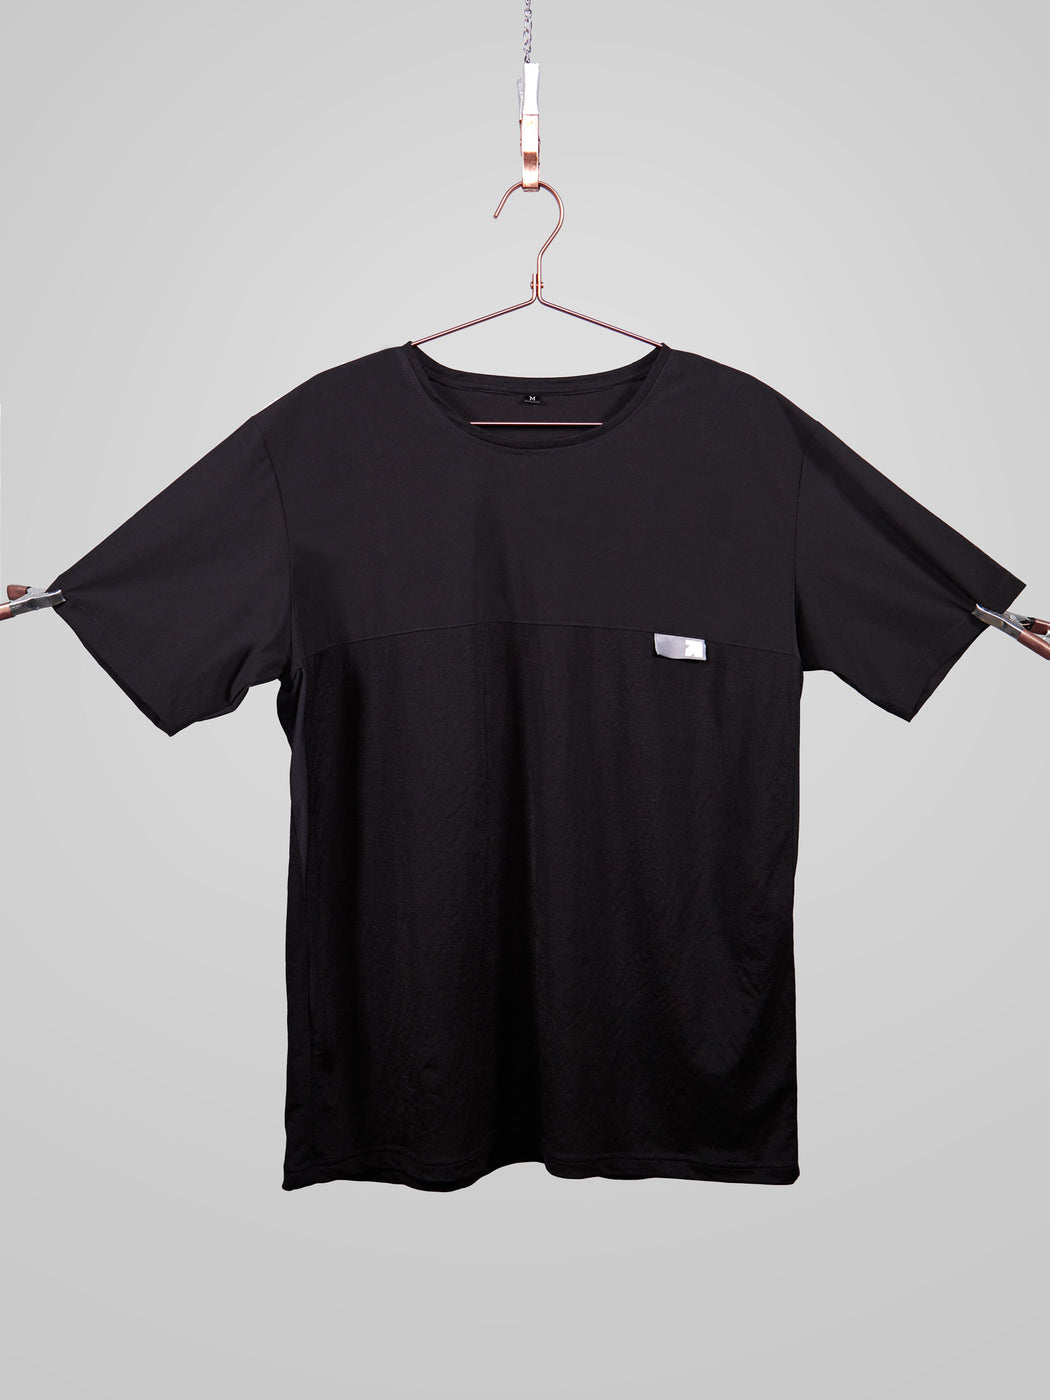 Unisex Ultimate Utilitarian Black Male T-shirt